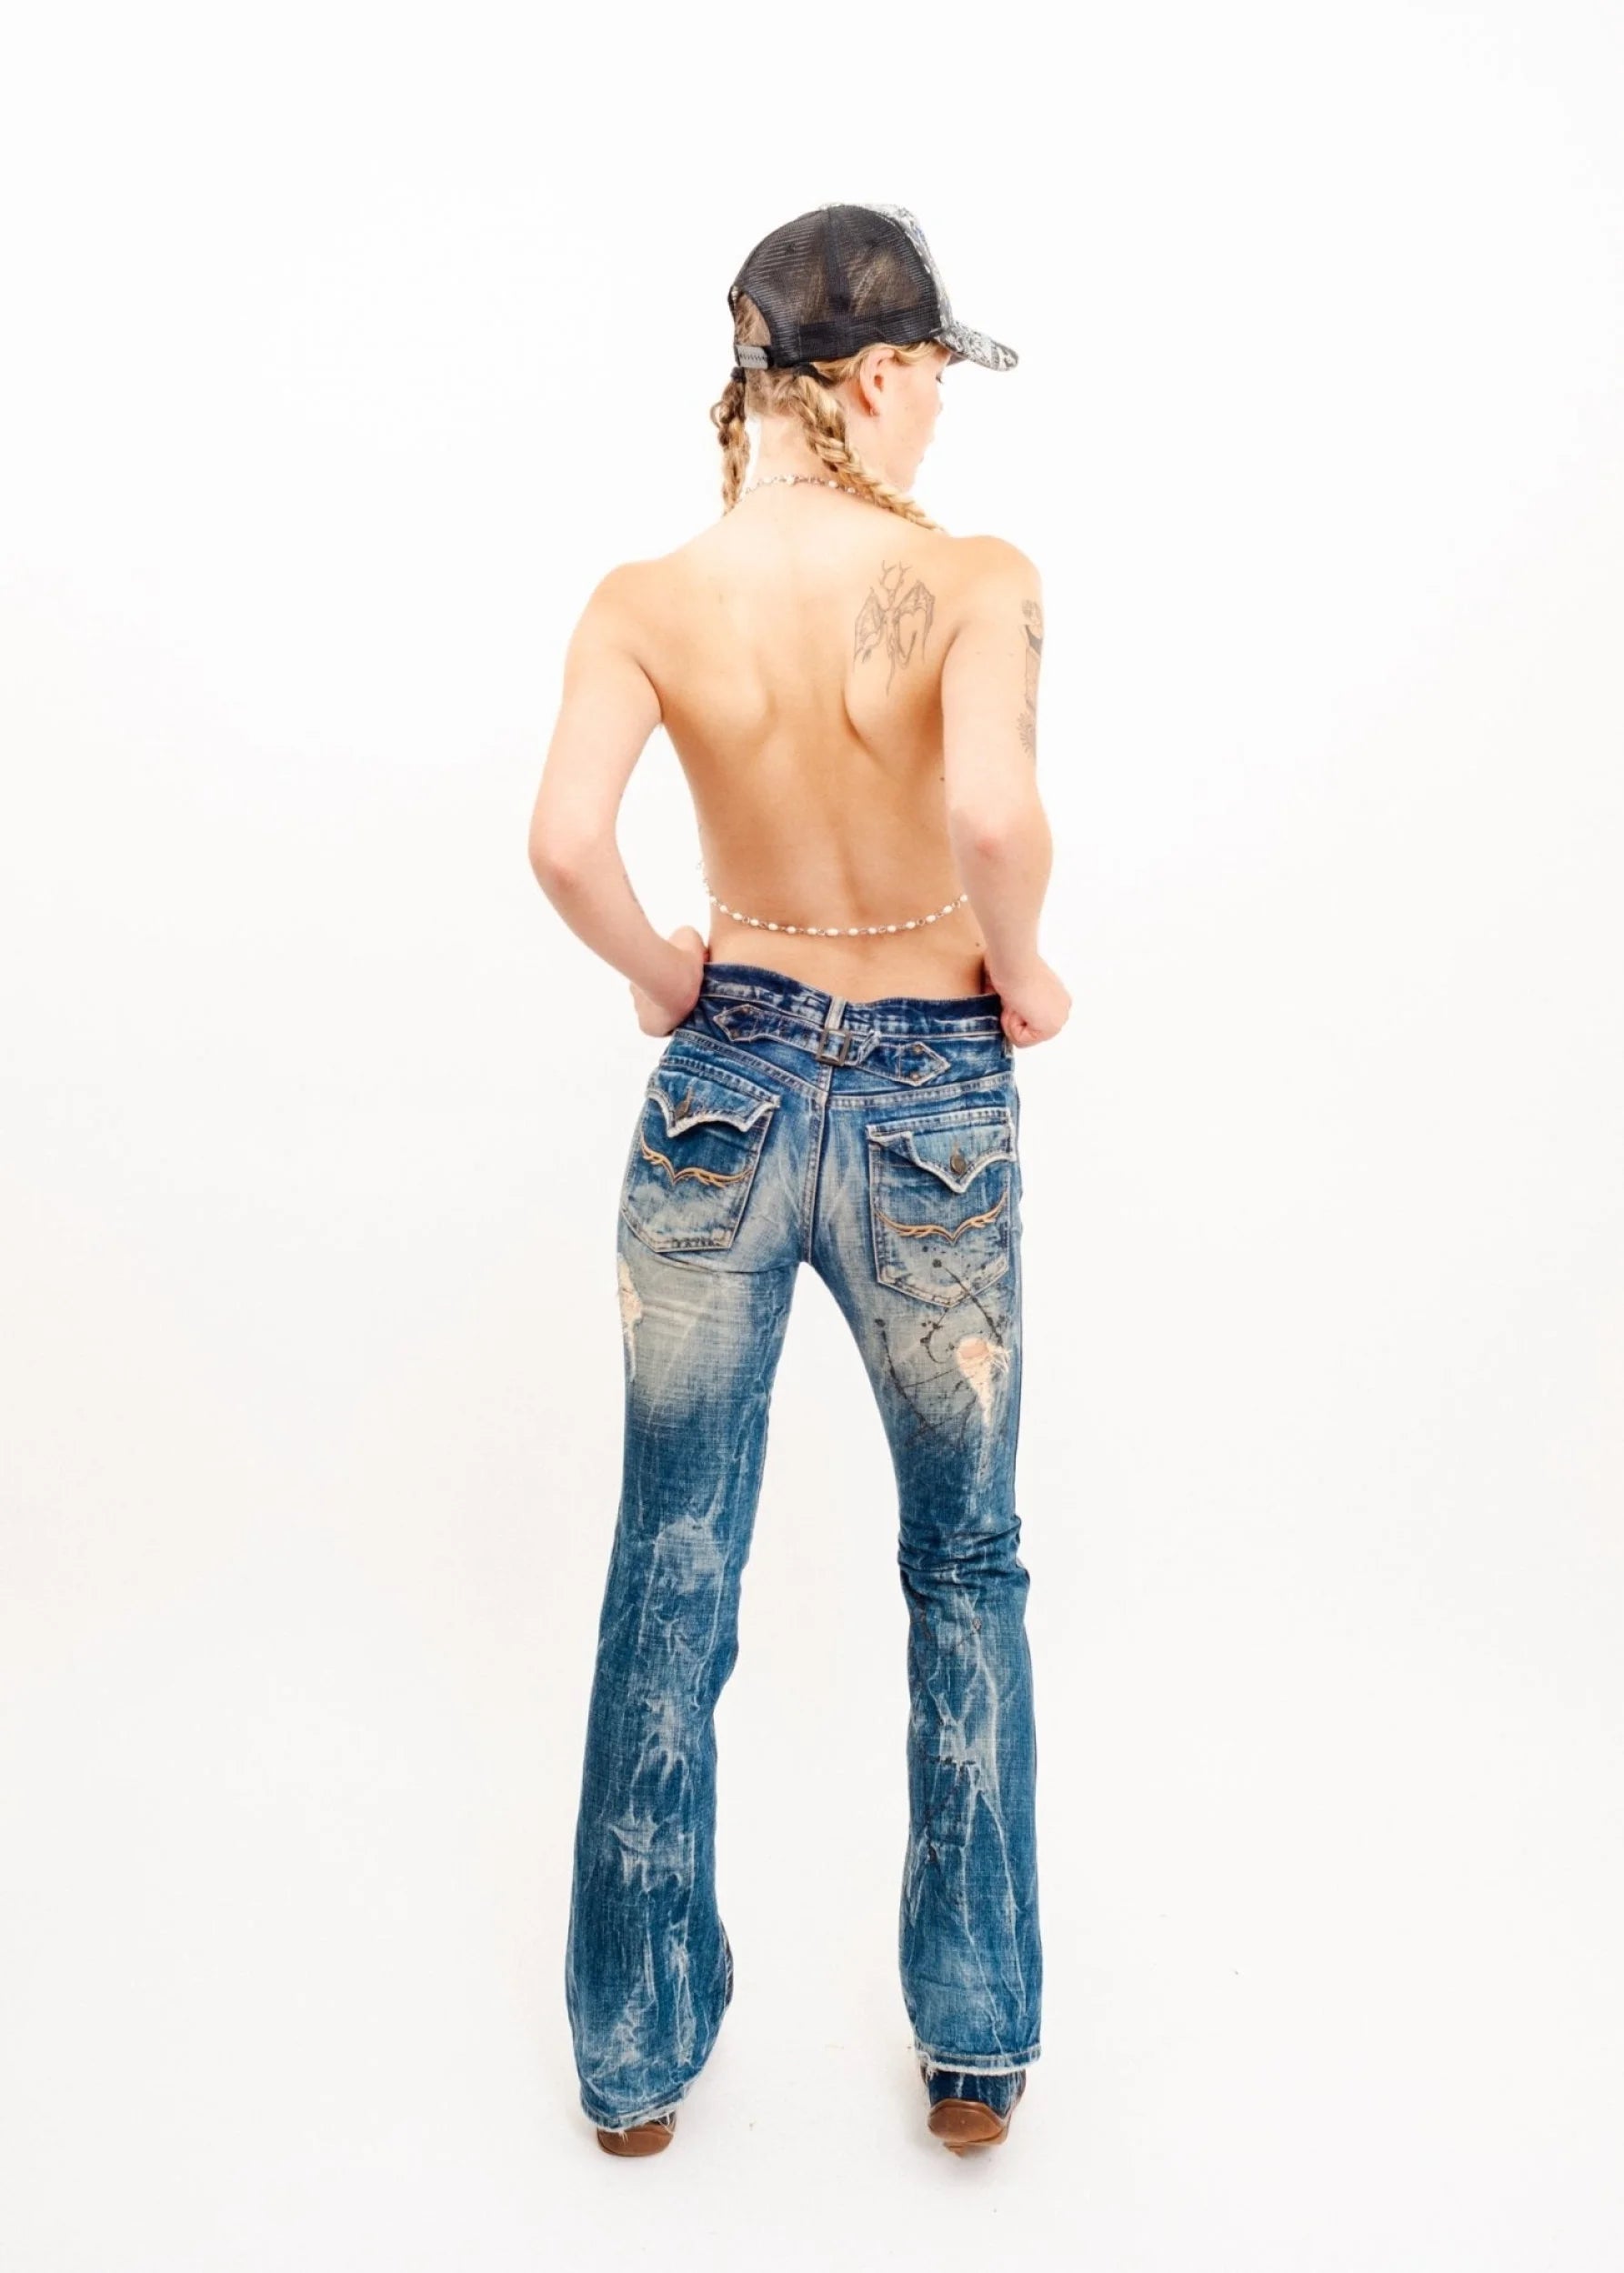 Fuga Engineered jeans